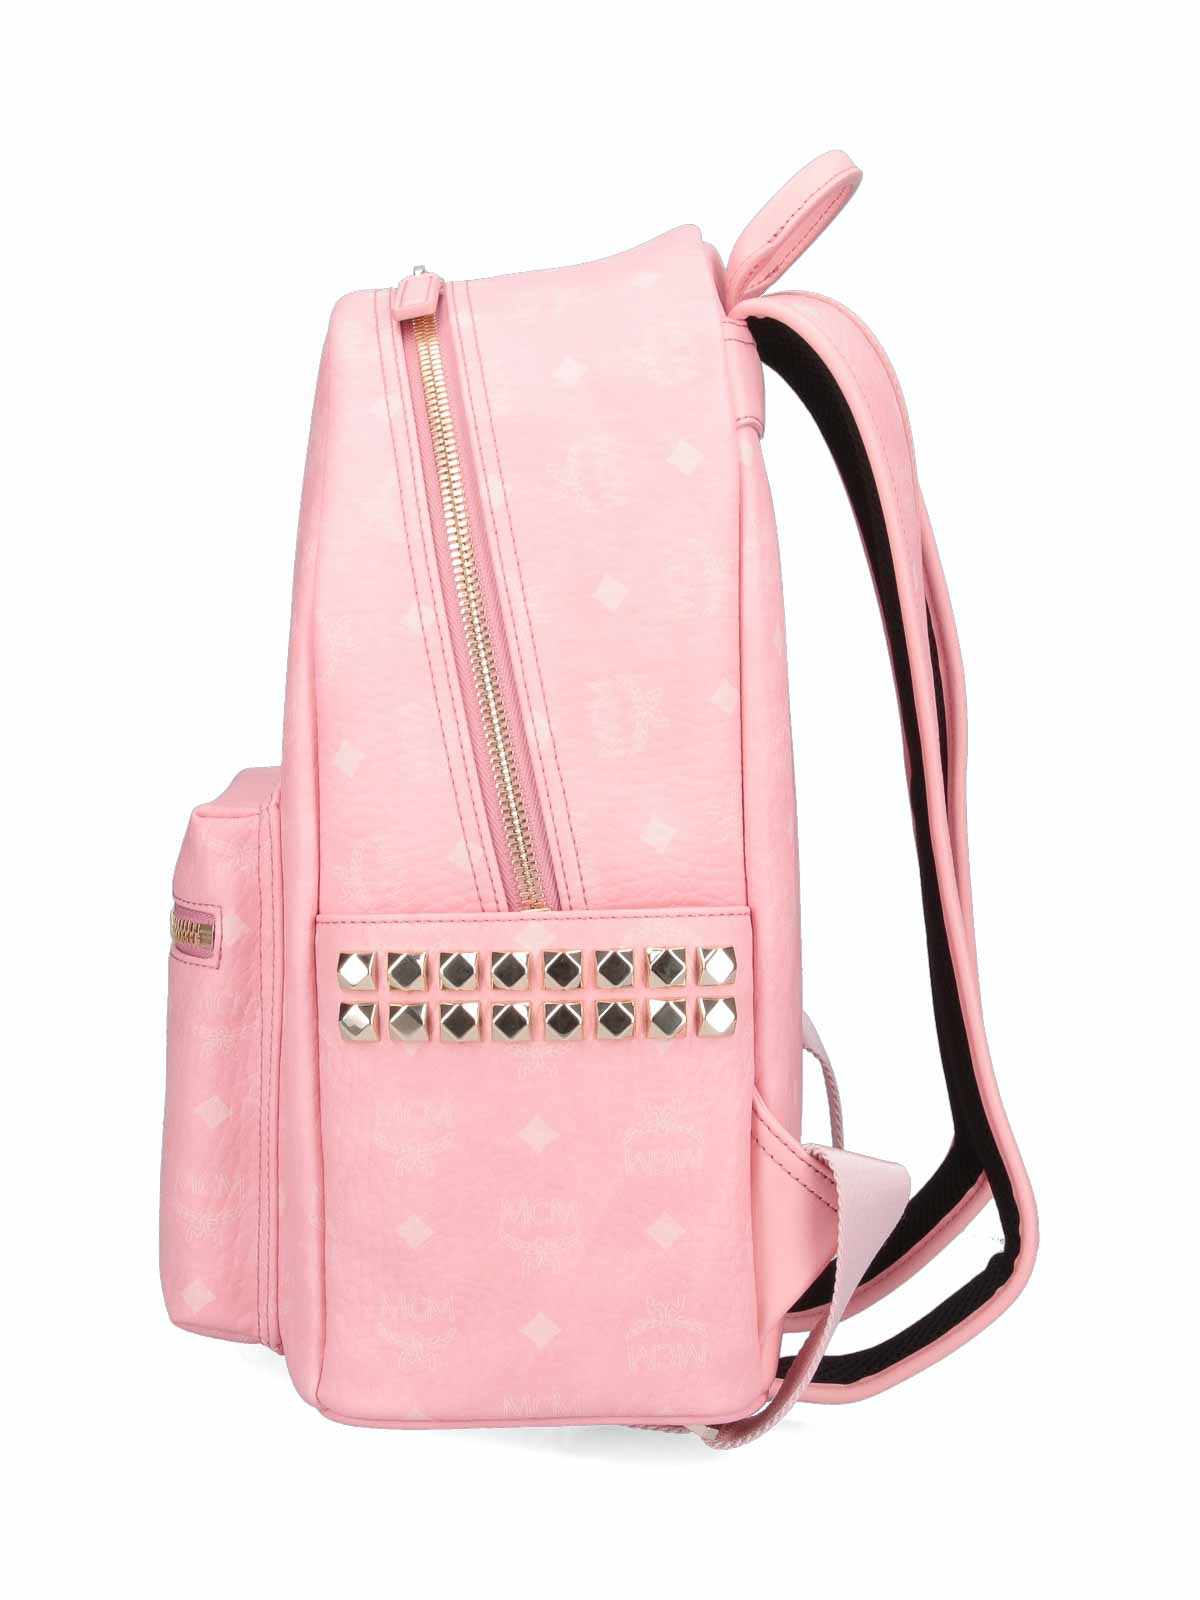 mcm sling bag pink